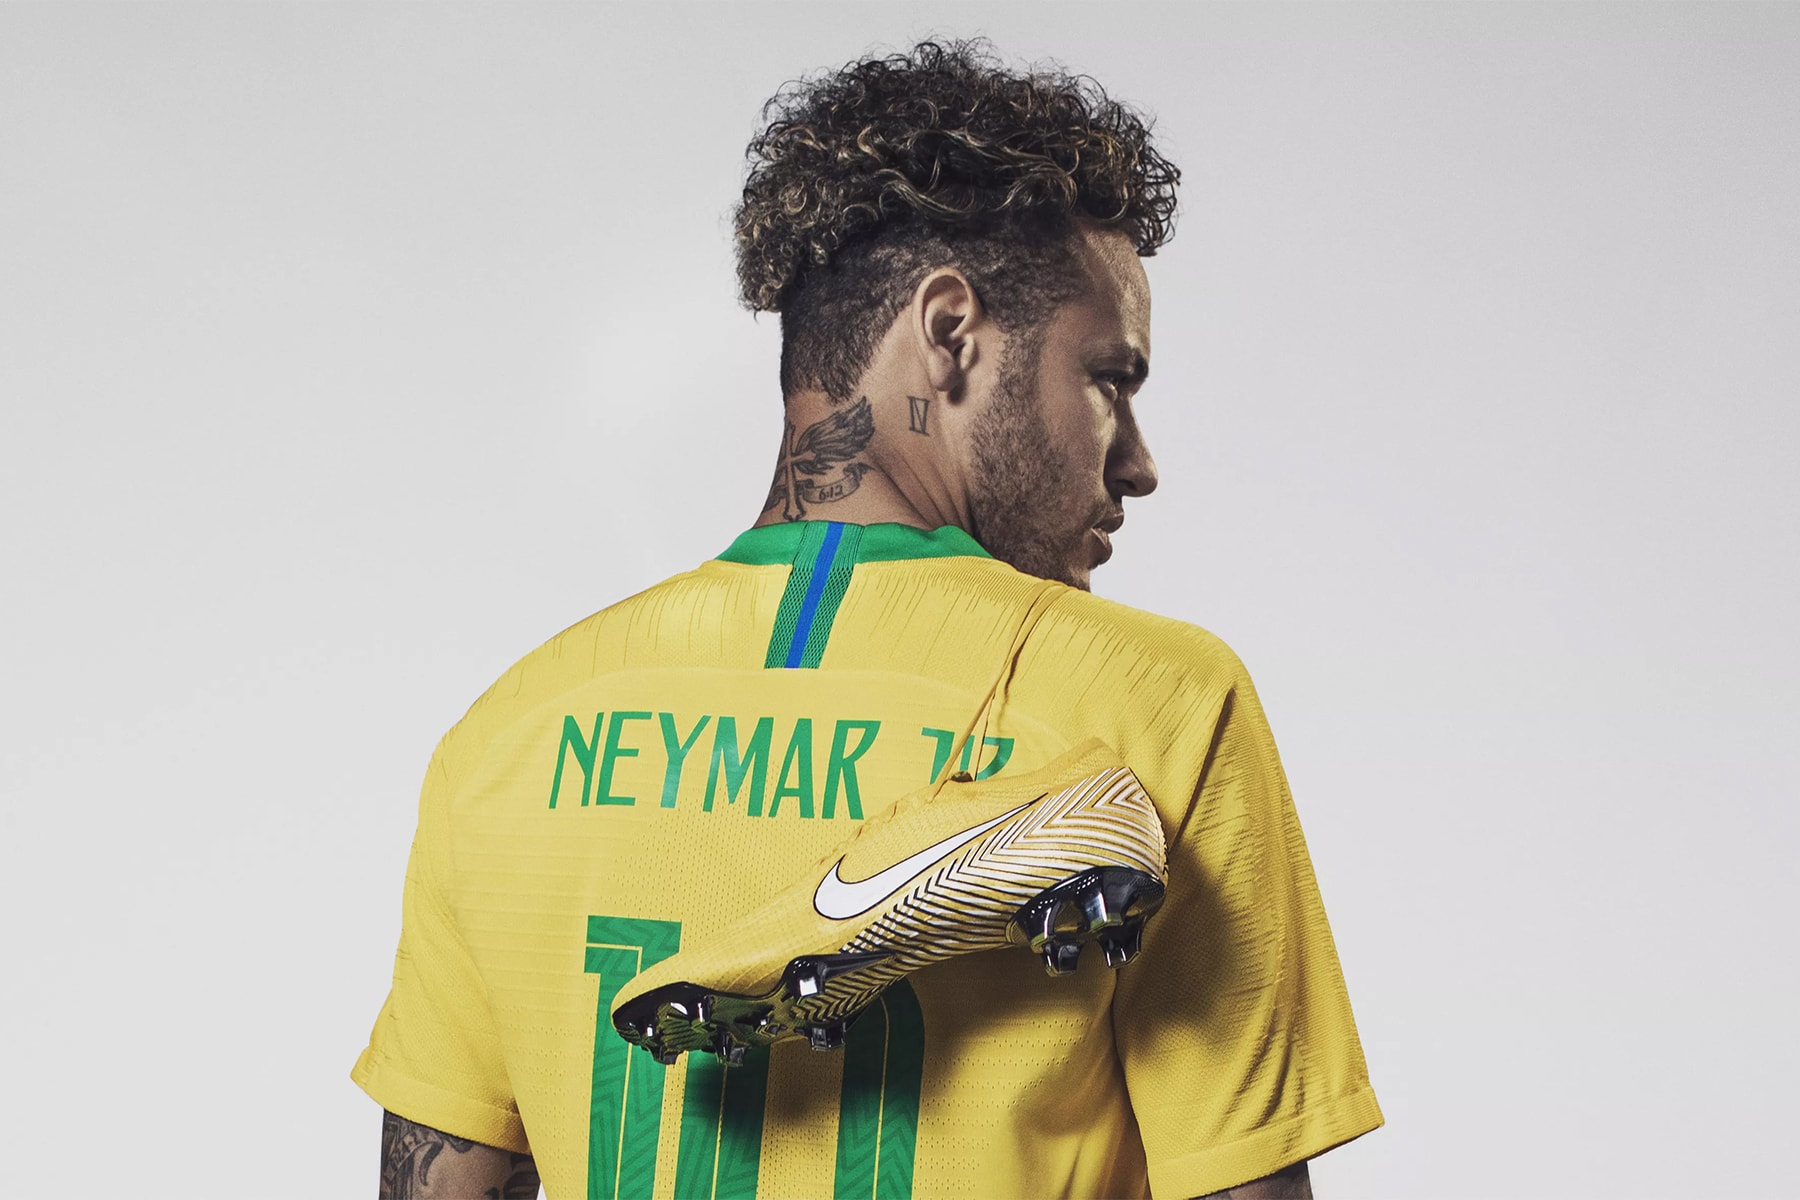 Neymar Jr. Vapor 360 "Meu Jogo" |